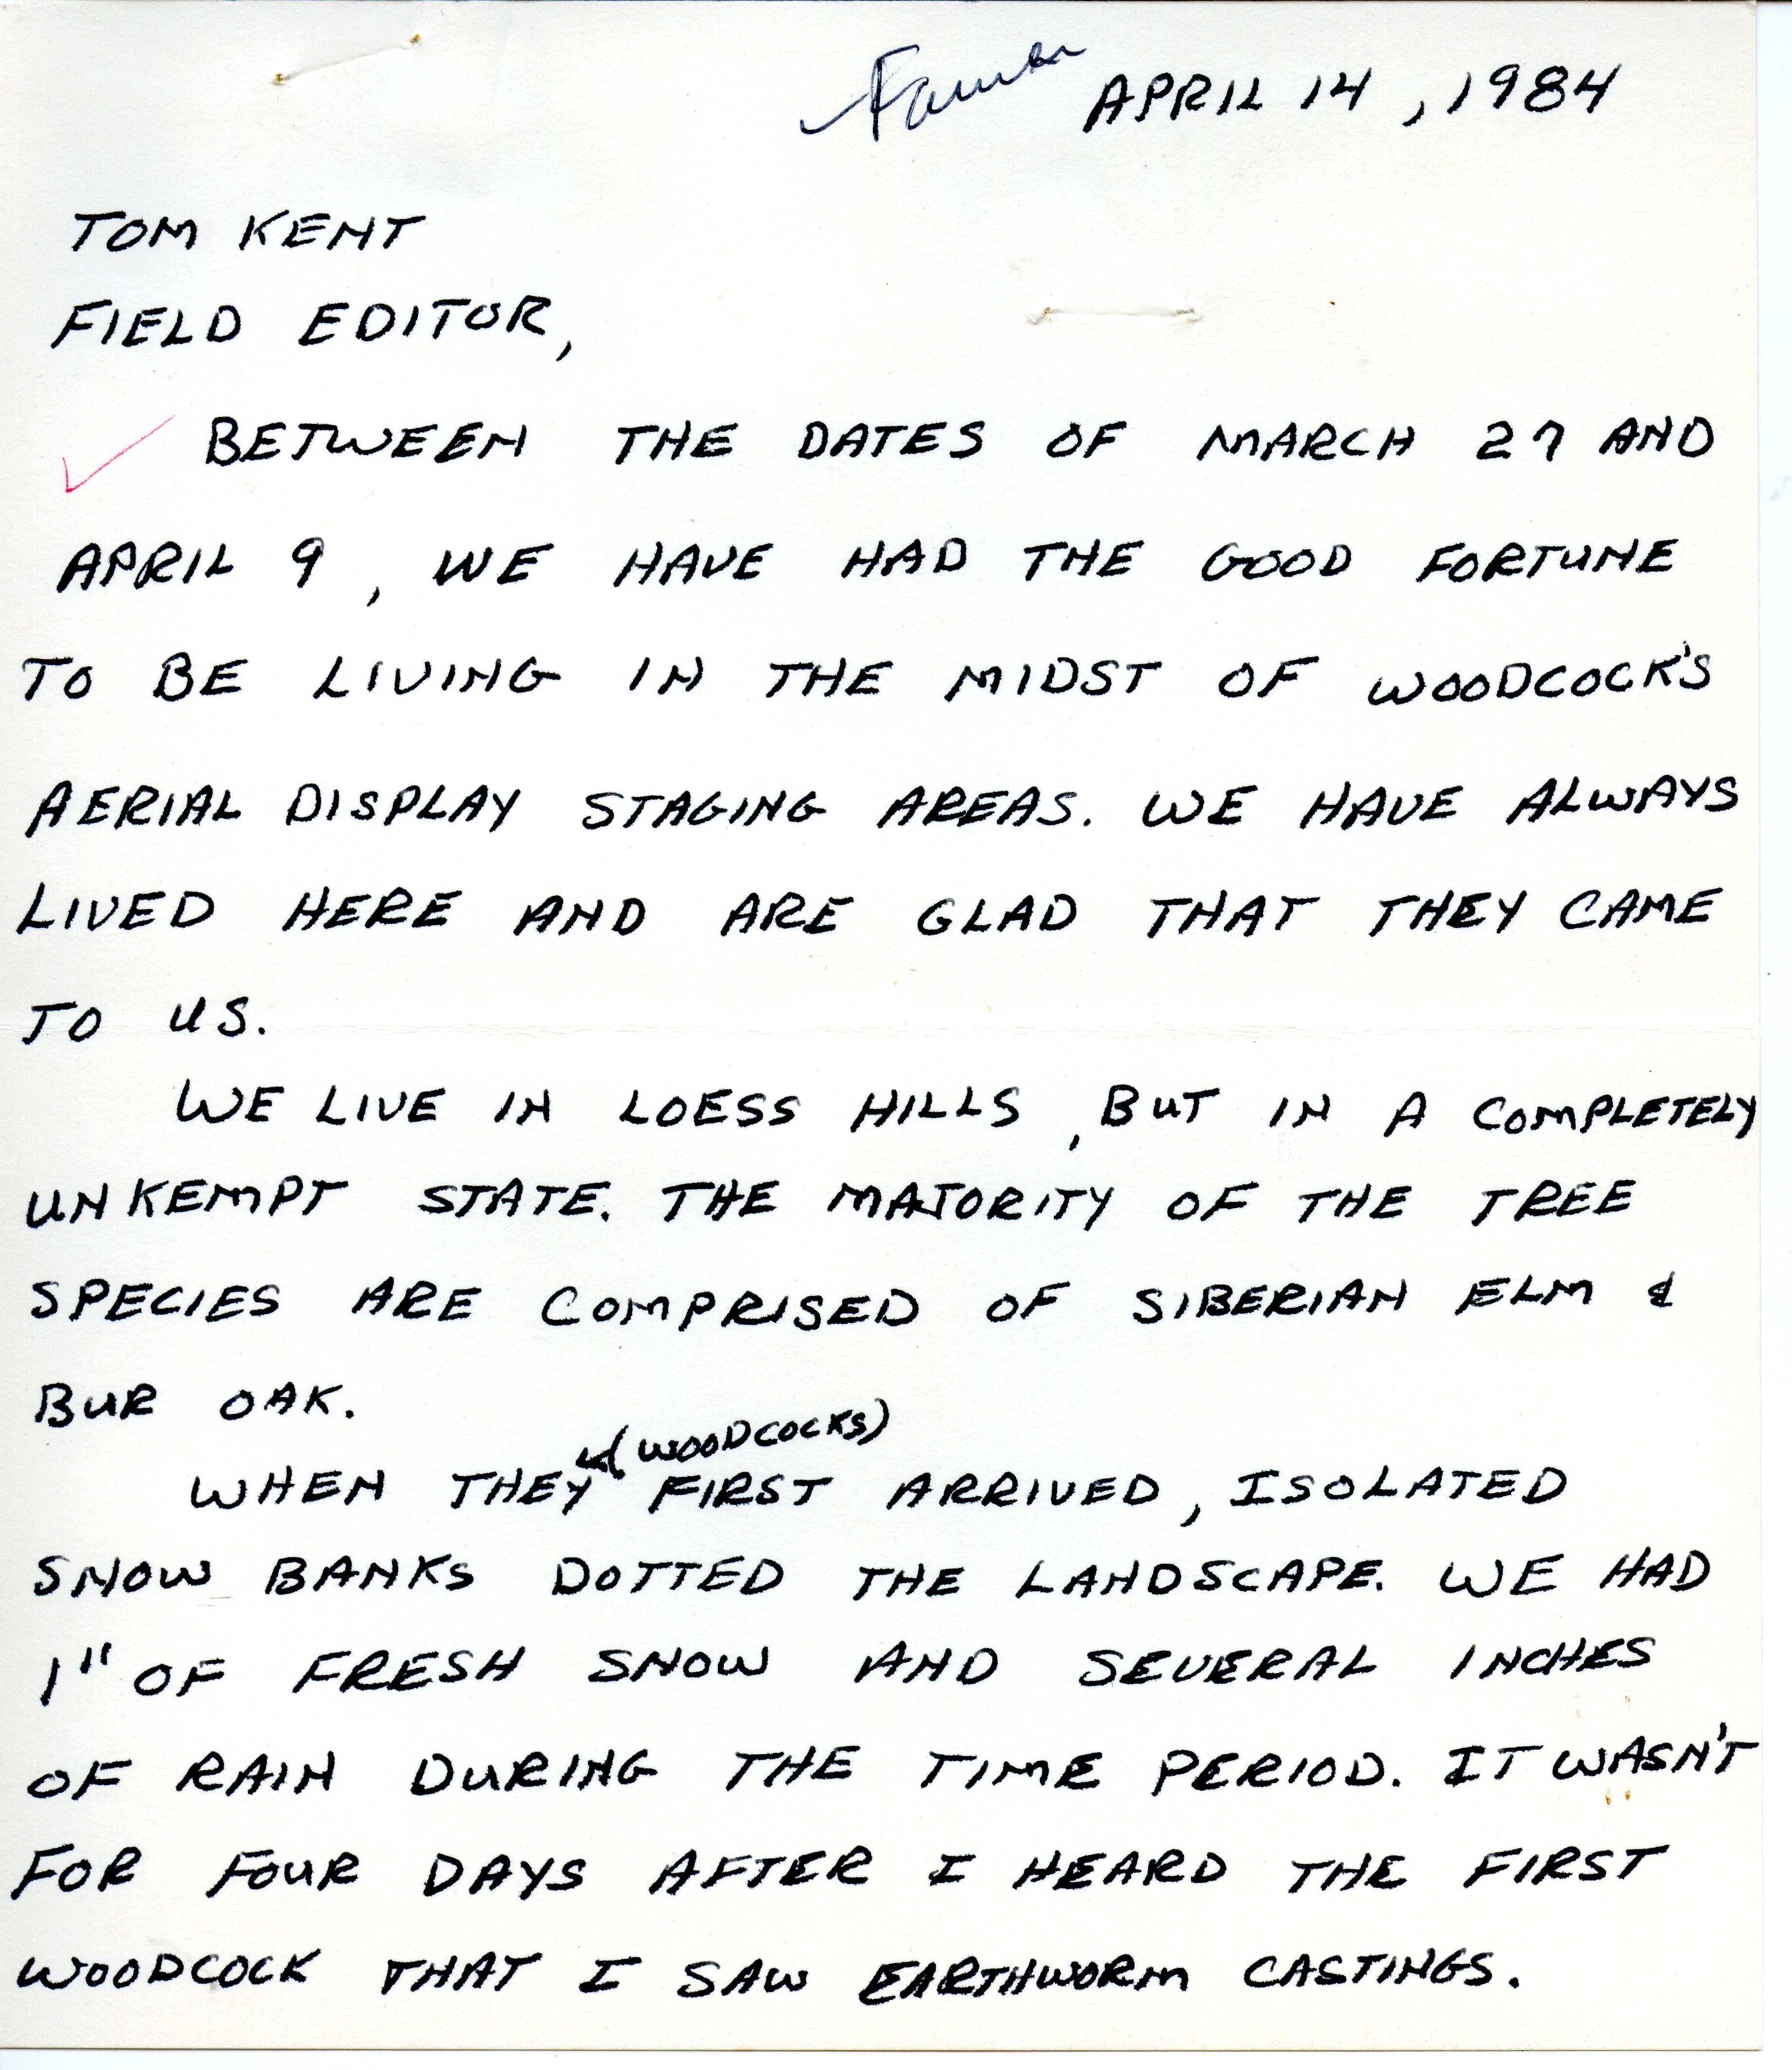 Larry Farmer letter to Thomas H. Kent regarding woodcocks' aerial display, April 14, 1984